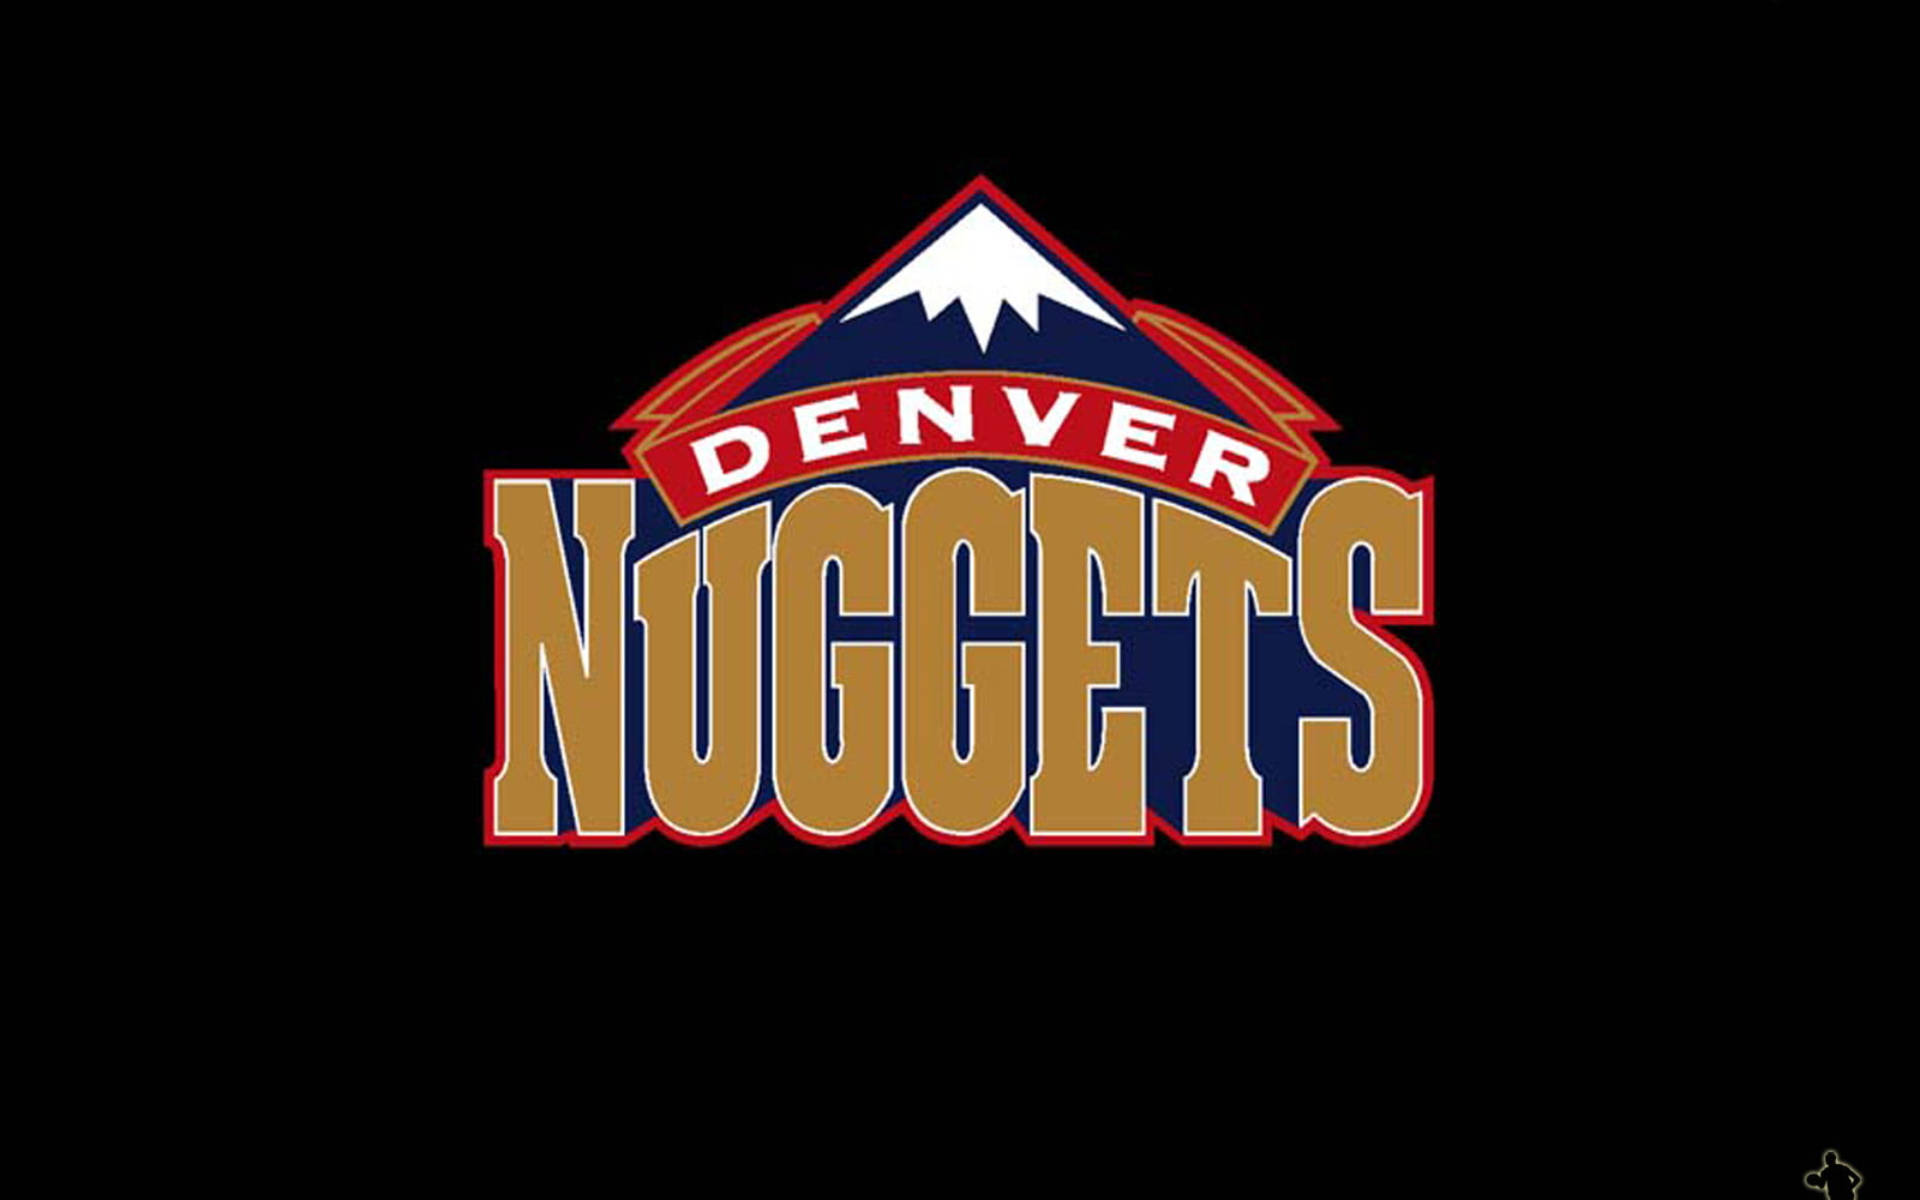 Denver Nuggets Wallpapers on Behance